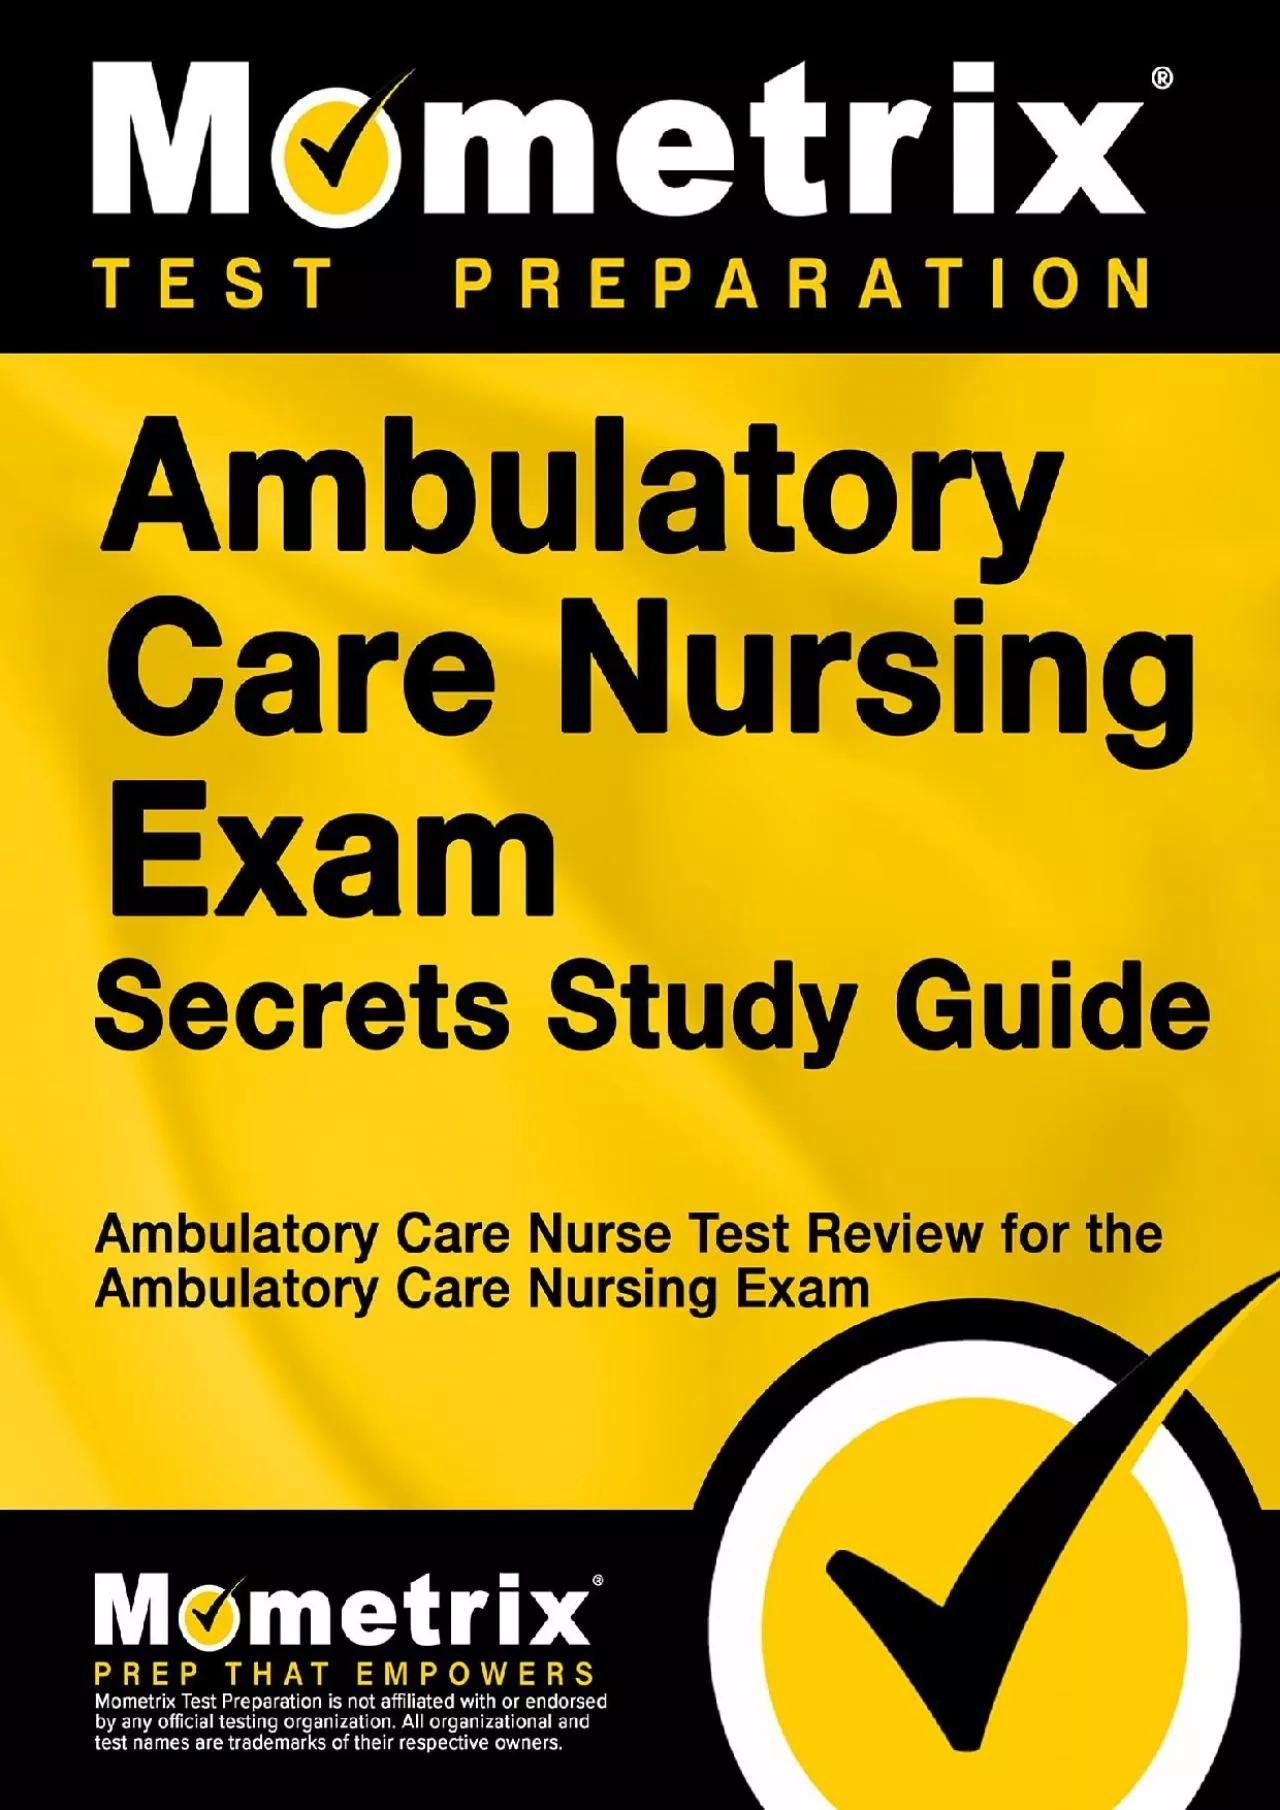 [DOWNLOAD] Ambulatory Care Nursing Exam Secrets Study Guide: Ambulatory Care Nurse Test